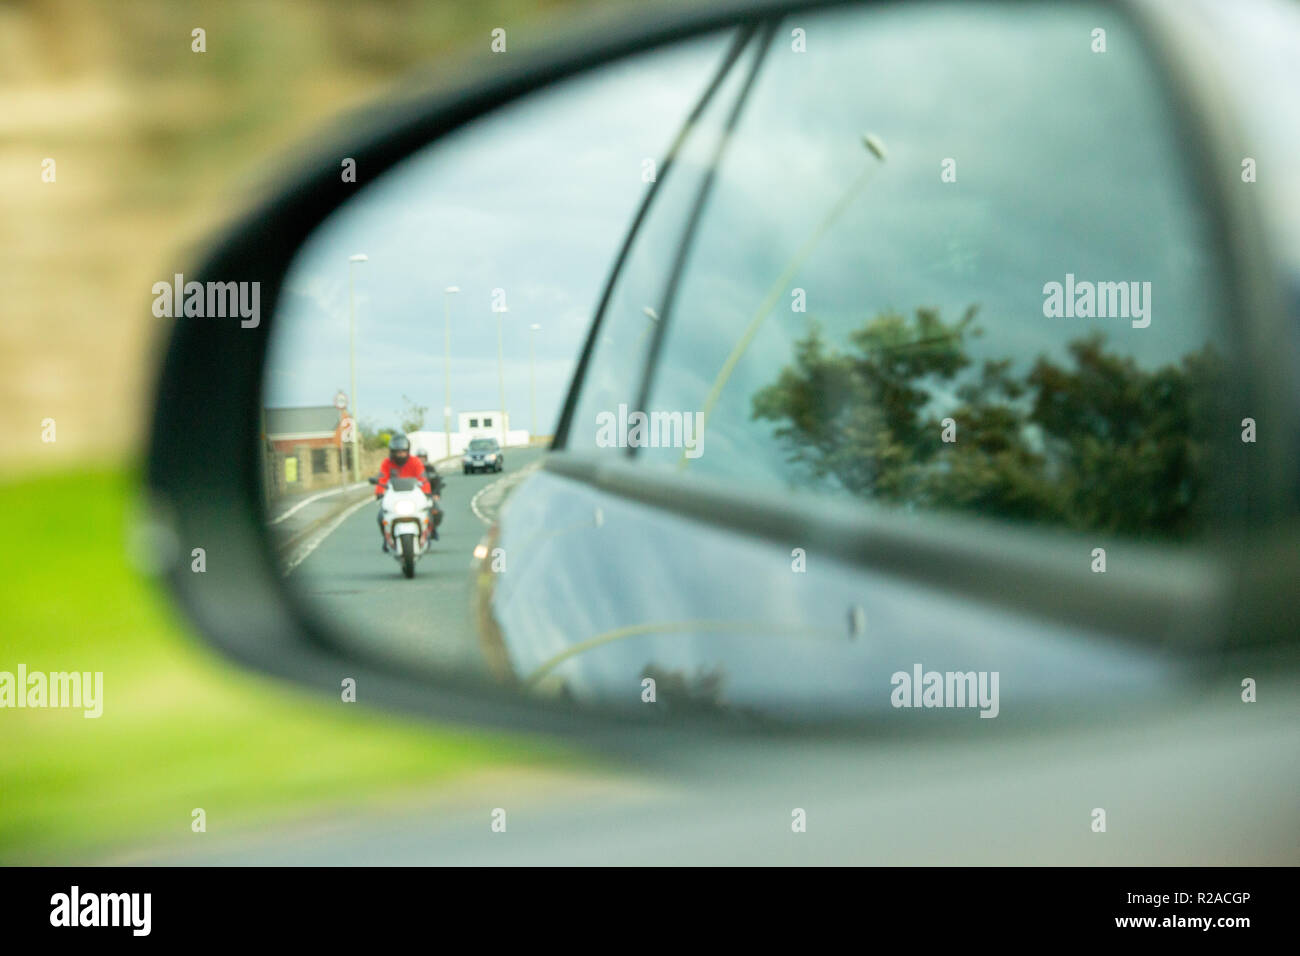 Biker in car mirror. Think Bike Stock Photo